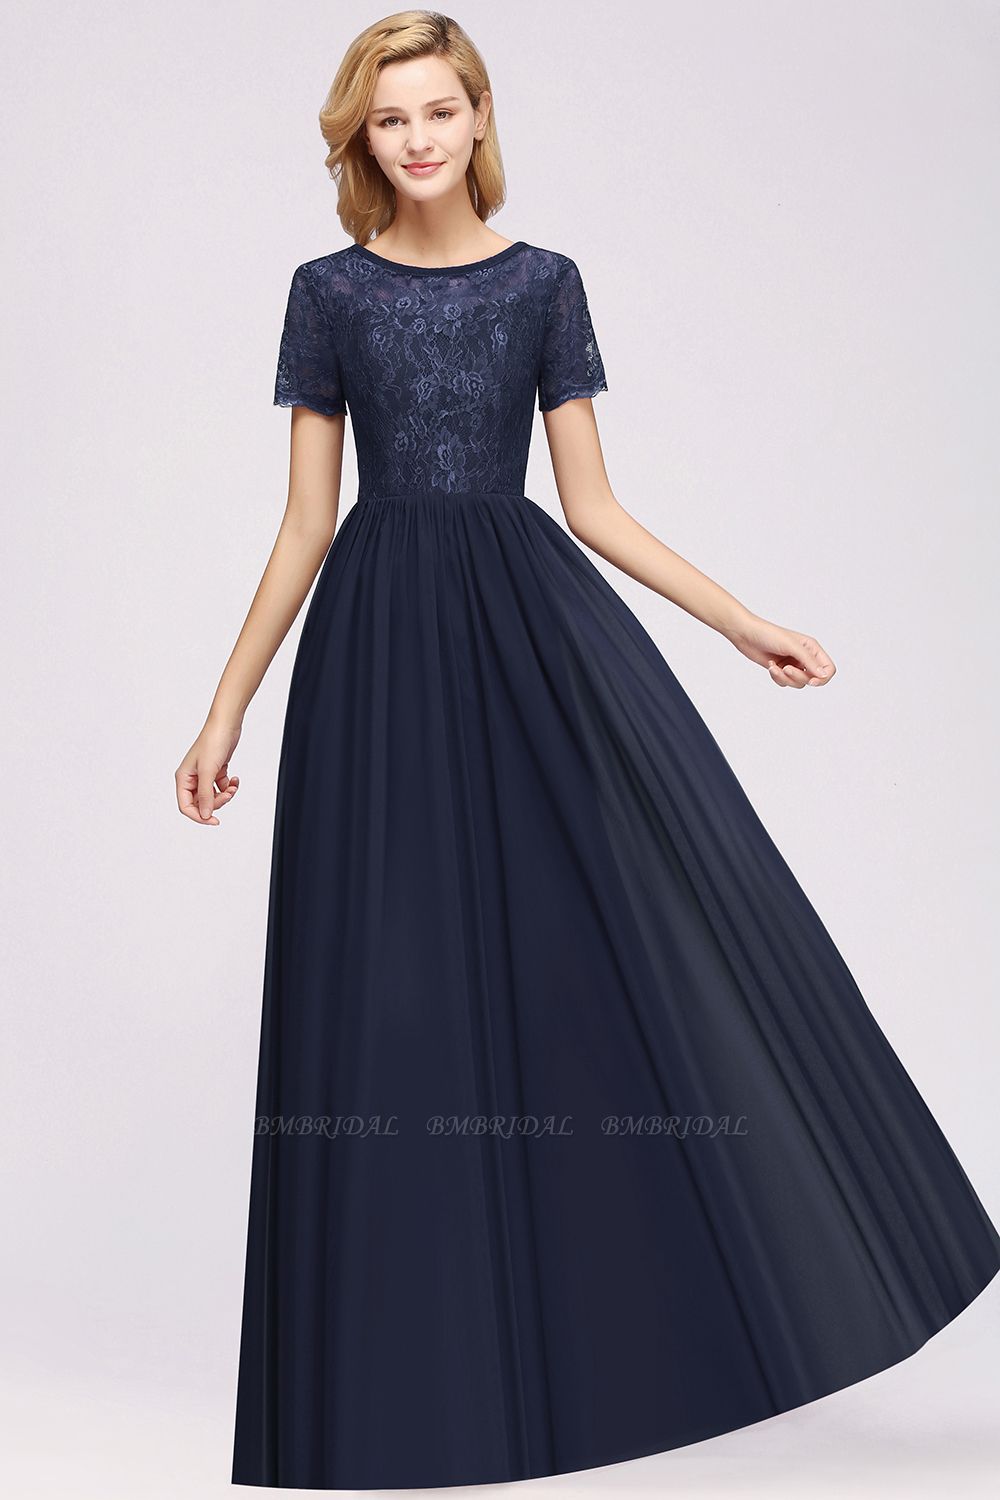 BMbridal Elegant Dark Navy Long Lace Bridesmaid Dresses with Short-Sleeves